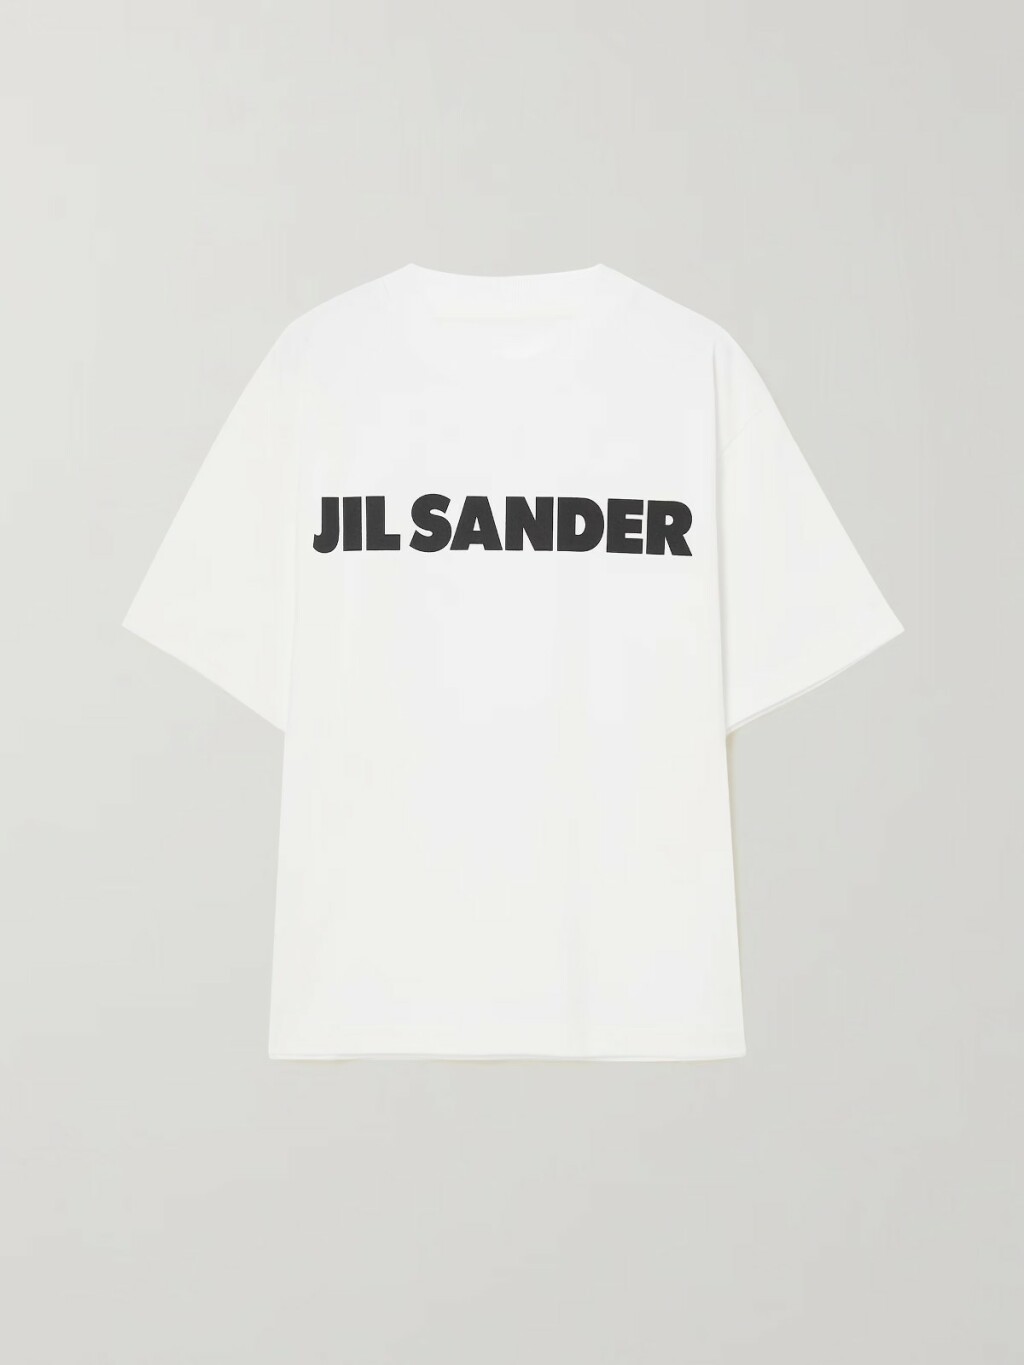 Majica s logom modne kuće Jil Sander